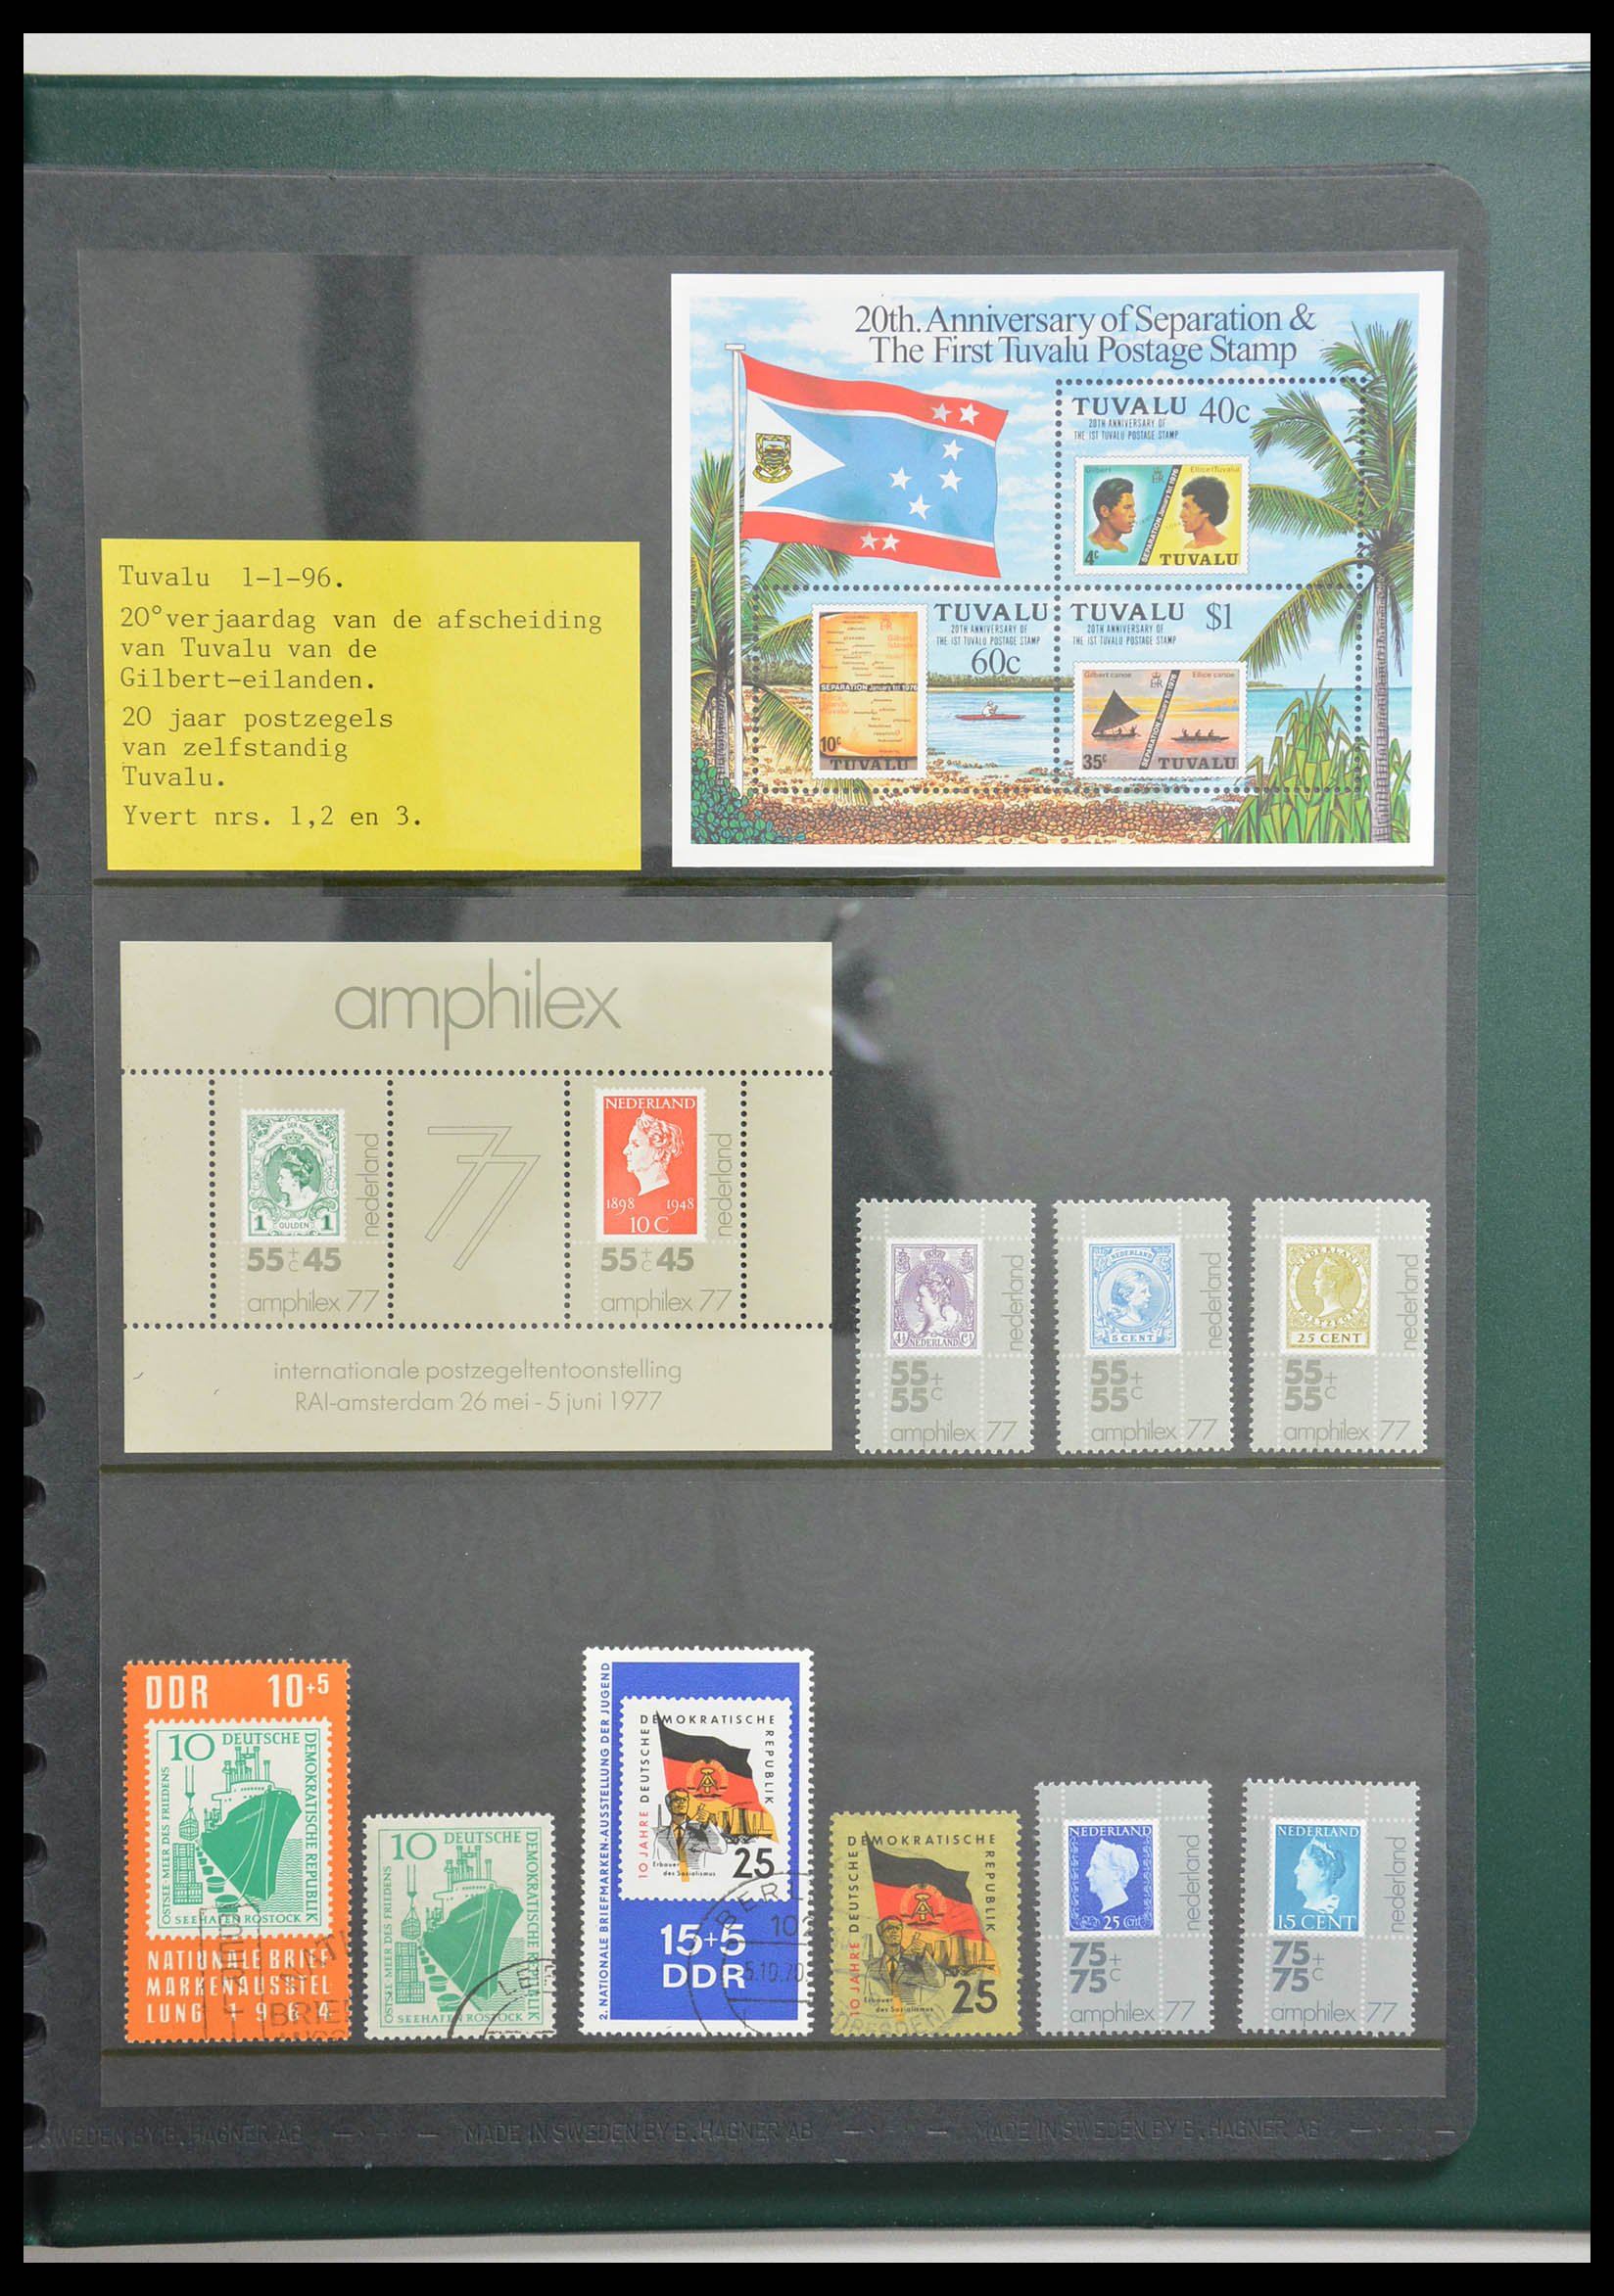 28337 083 - 28337 Postzegel op postzegel 1840-2001.